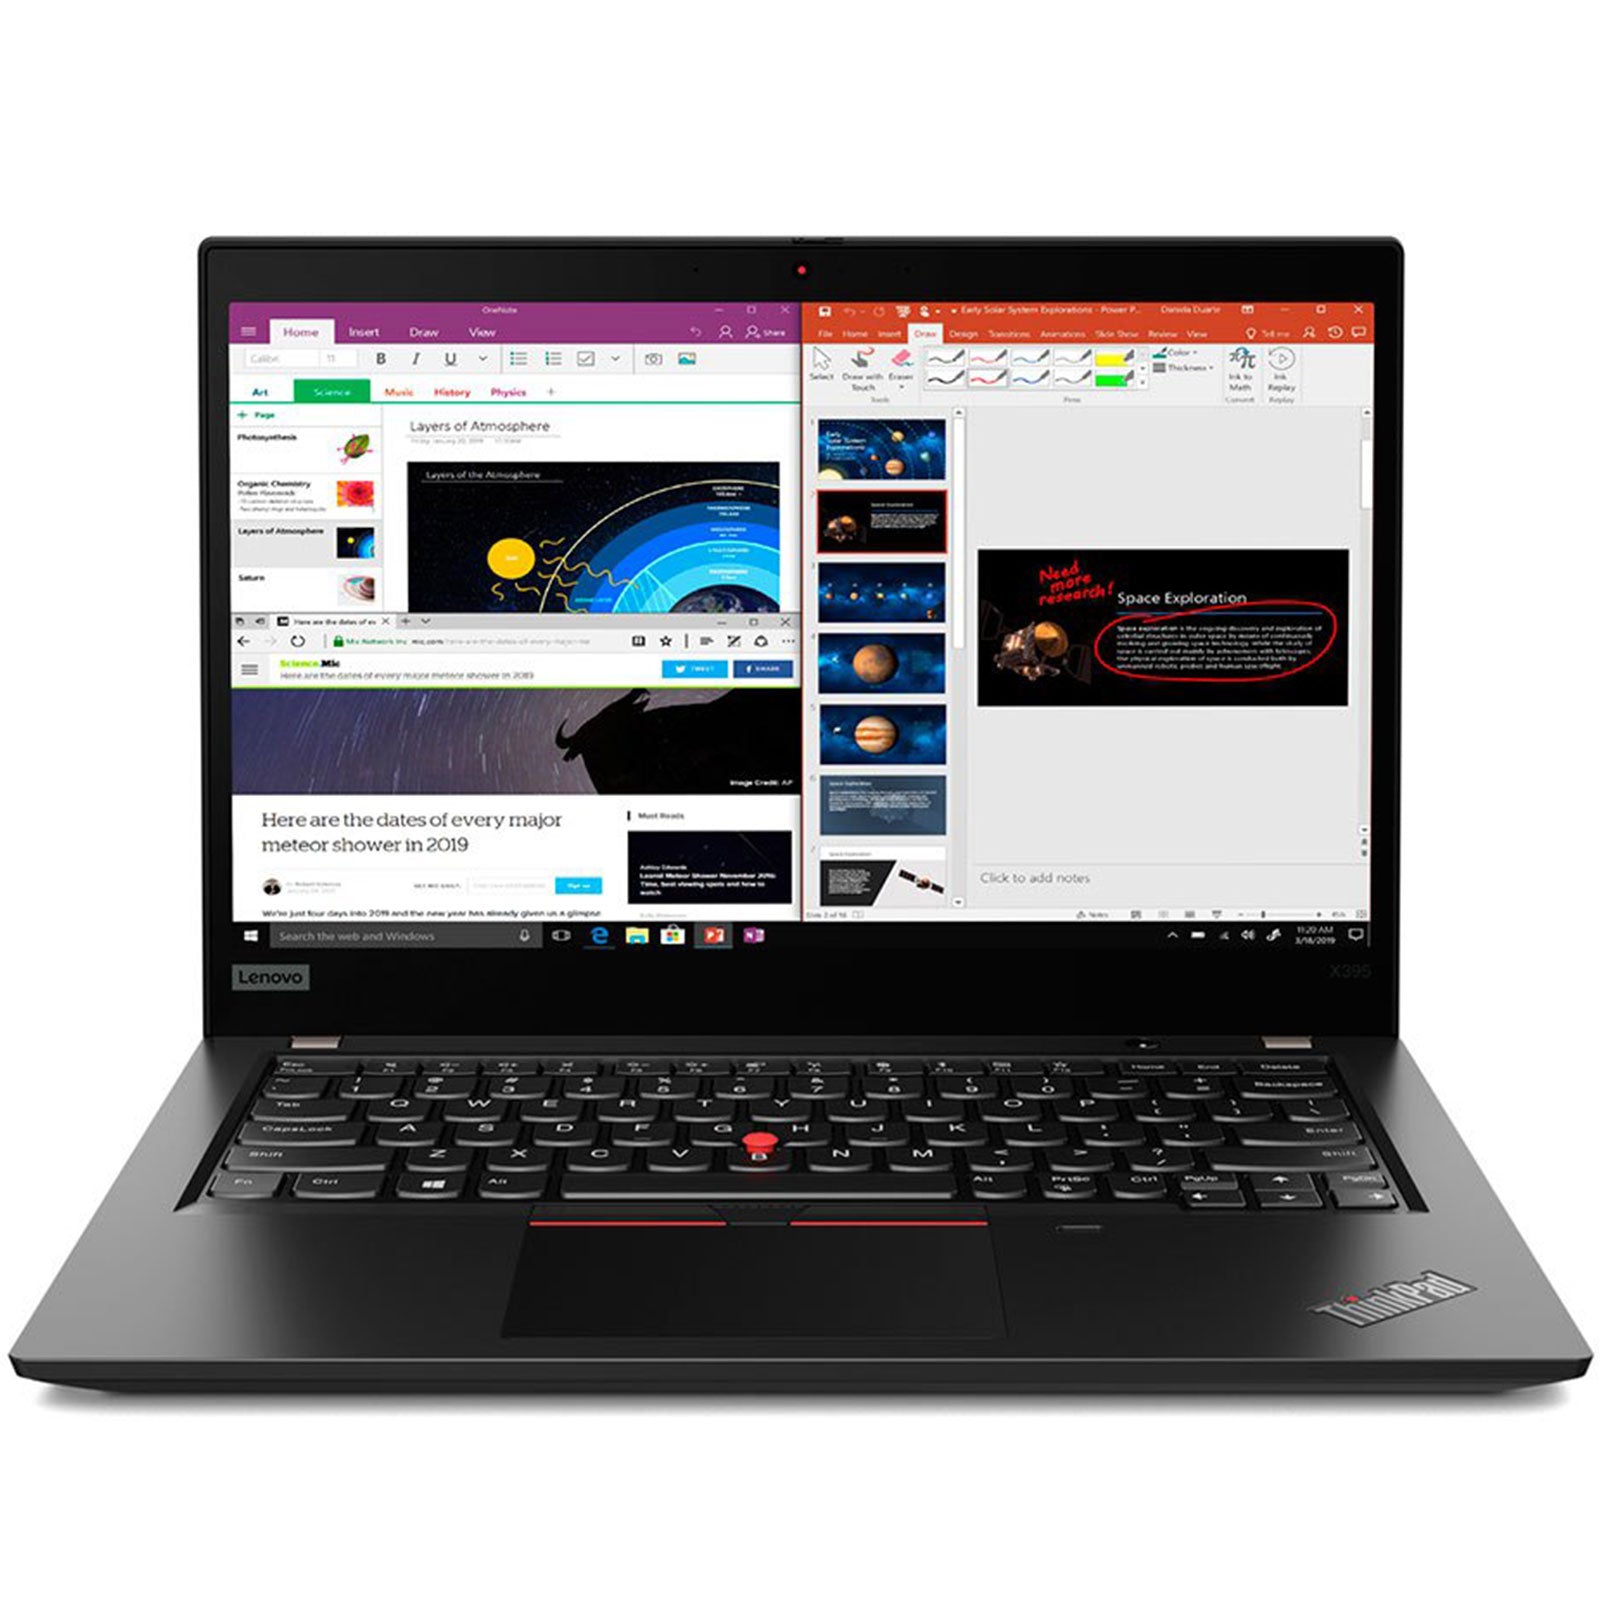 Notebook ricondizionato - Grado A - Lenovo ThinkPad X395 Notebook 13.3" Touchscreen AMD Ryzen 5 3500U Ram 16GB SSD 512GB Webcam (Ricondizionato Grado A) - Disponibile in 2-4 giorni lavorativi